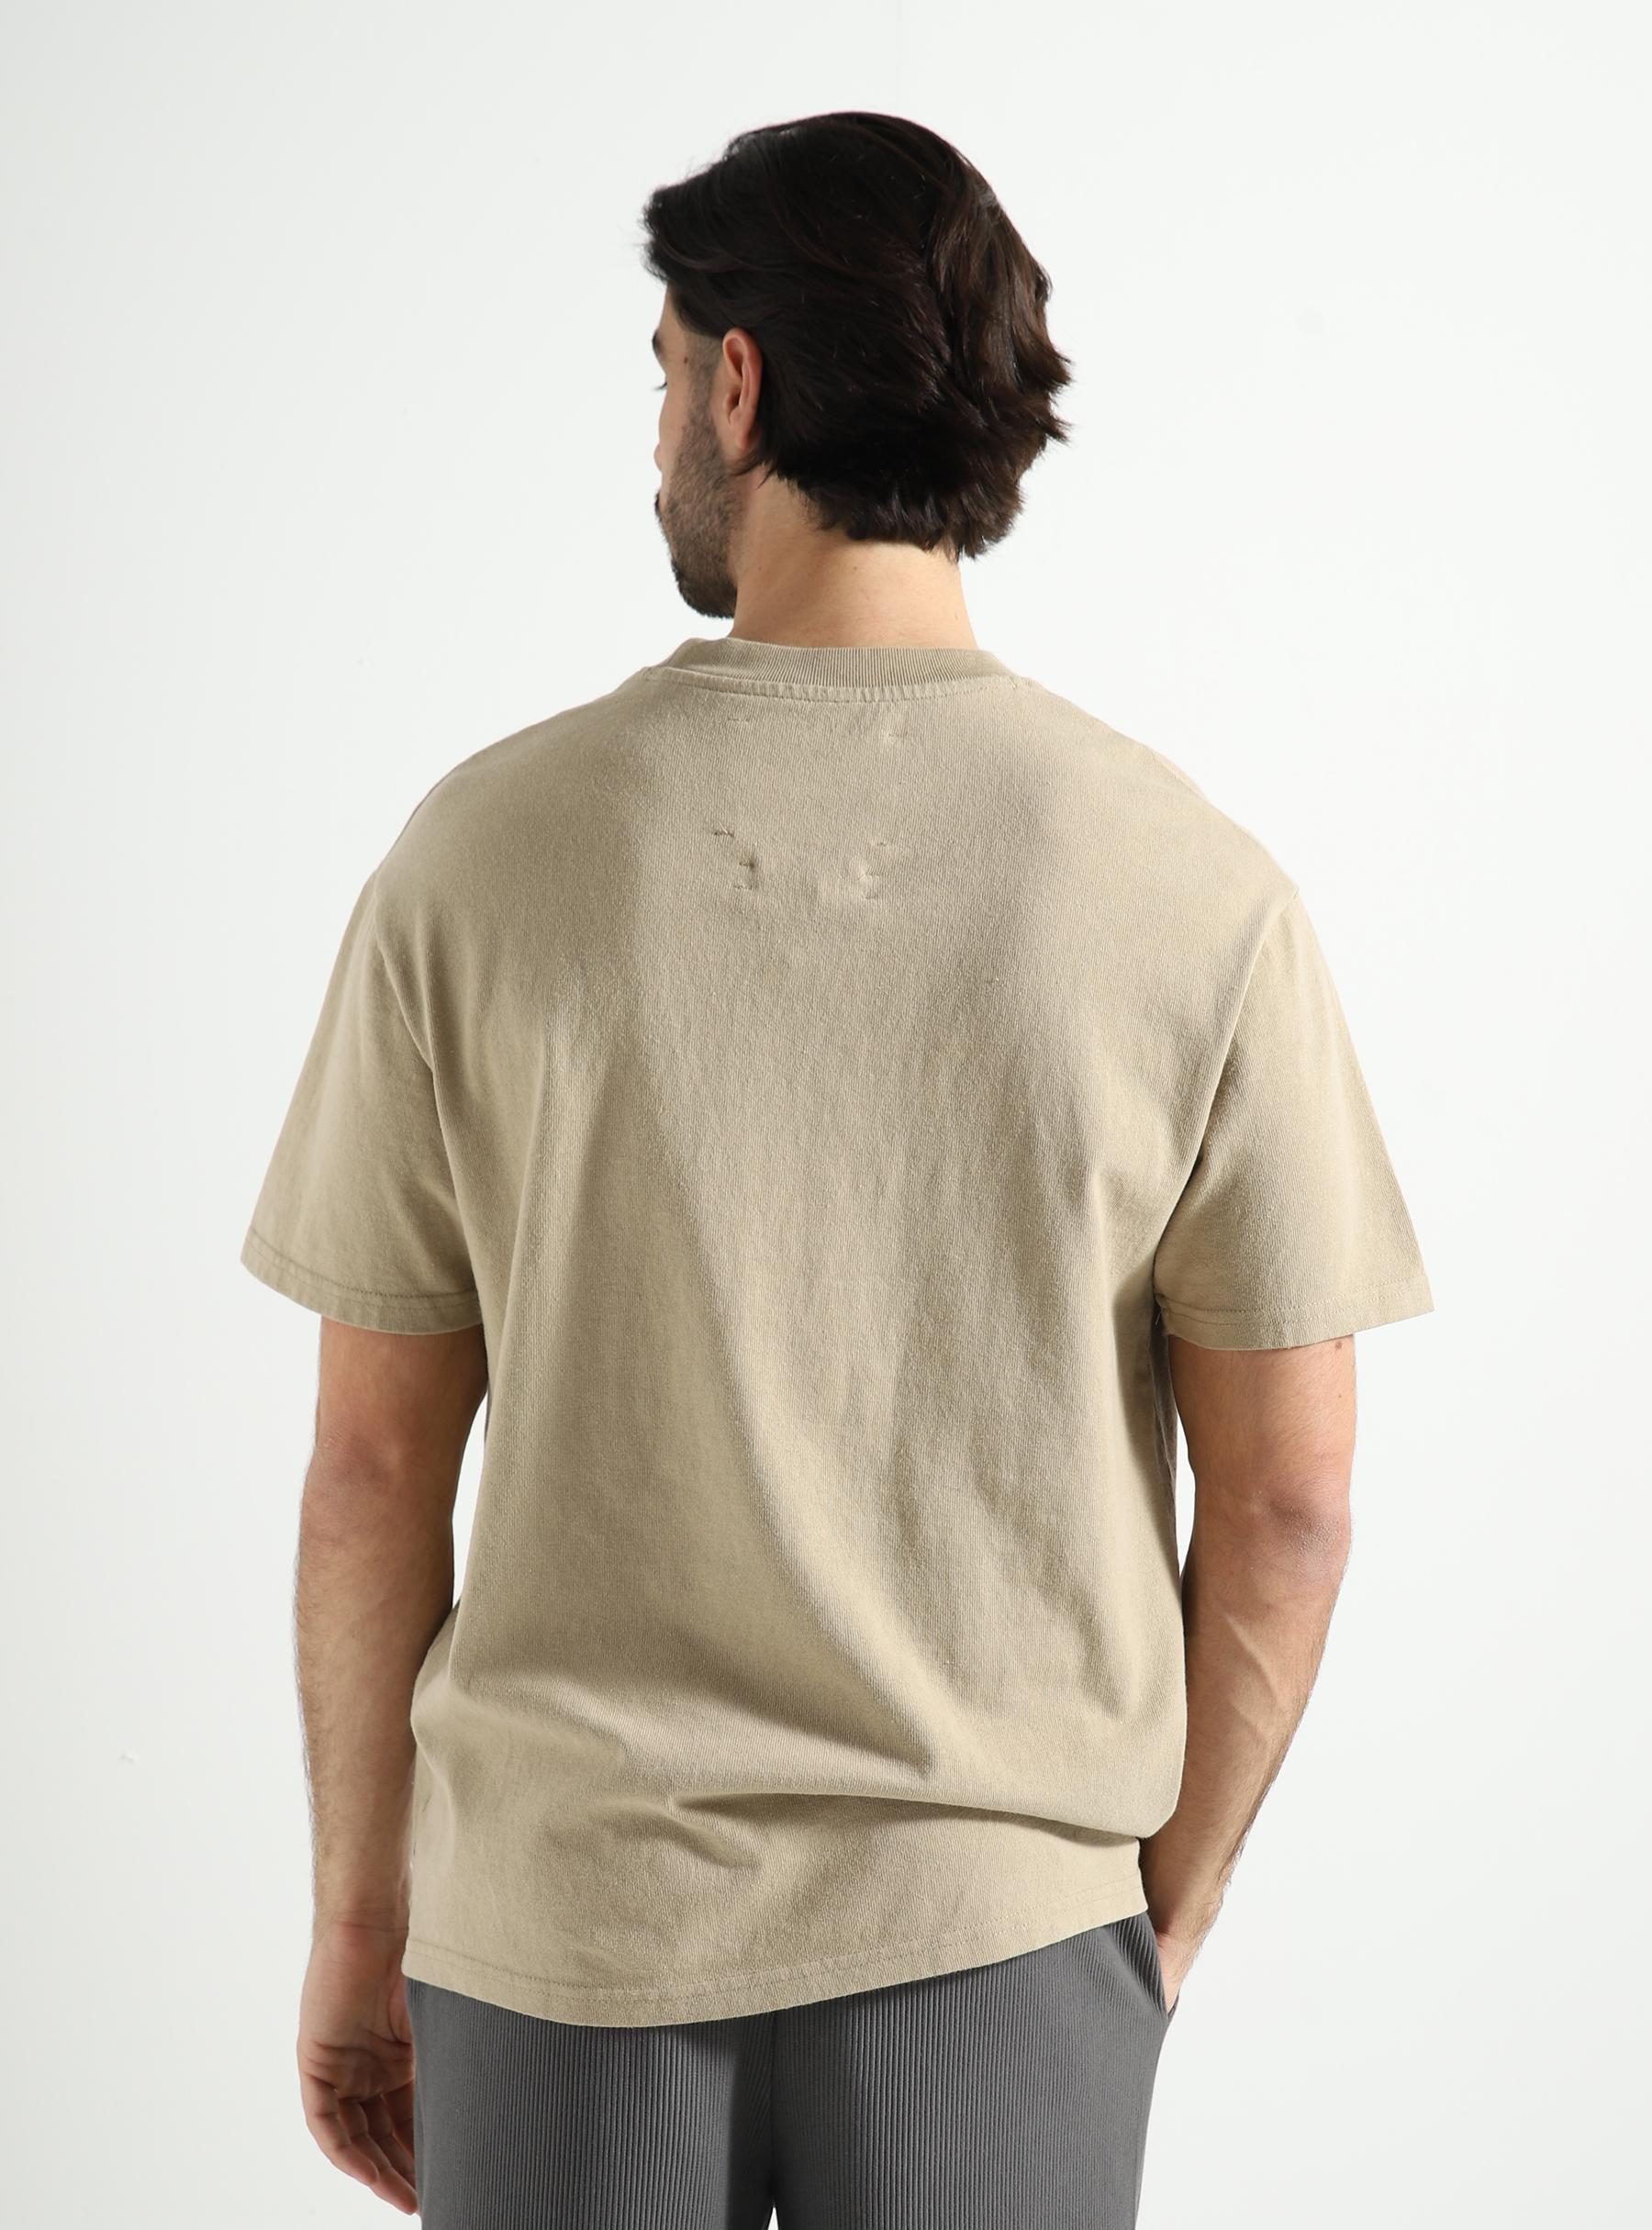 Atelier T-shirt Khaki 162